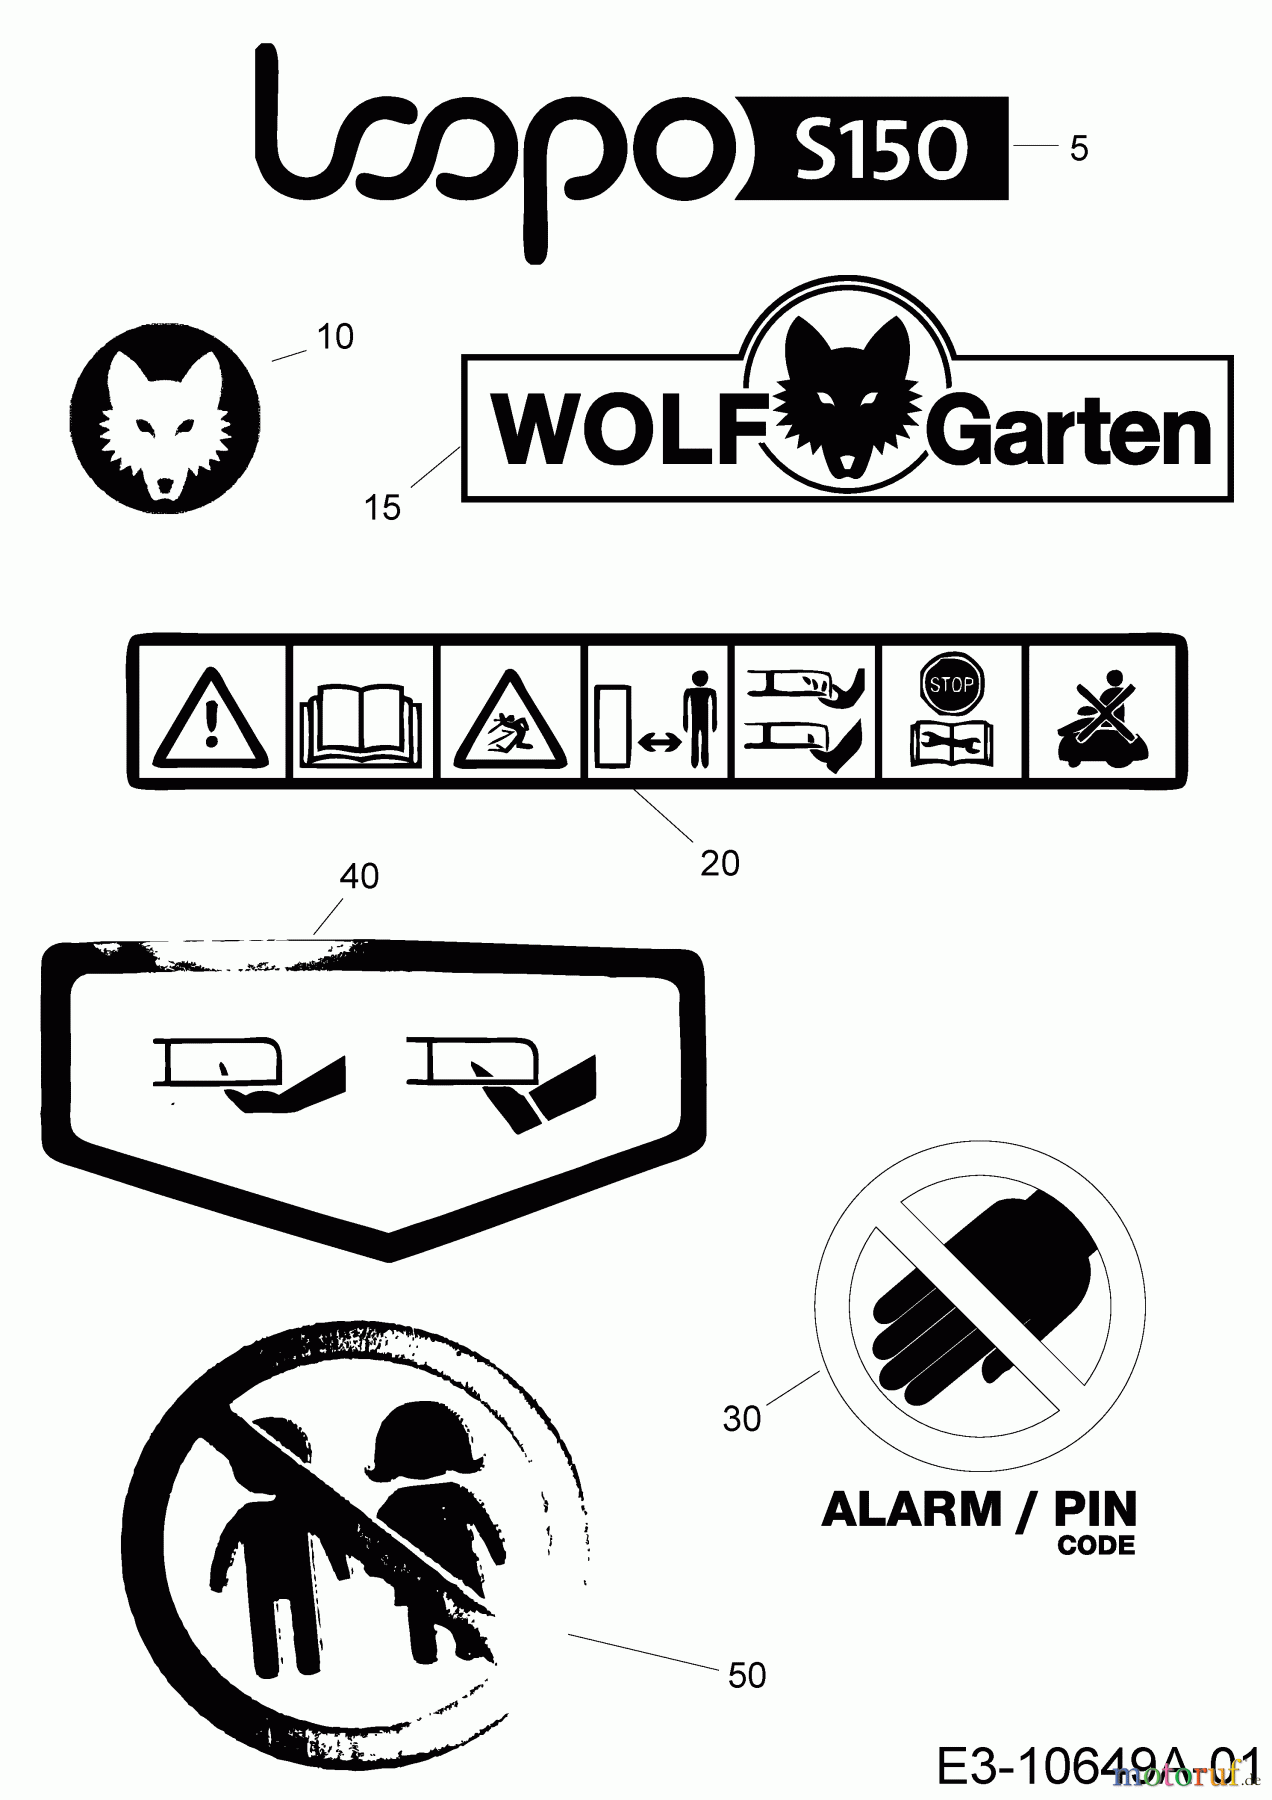  Wolf-Garten Mähroboter Loopo S150 22AXBACA650  (2018) Aufkleber